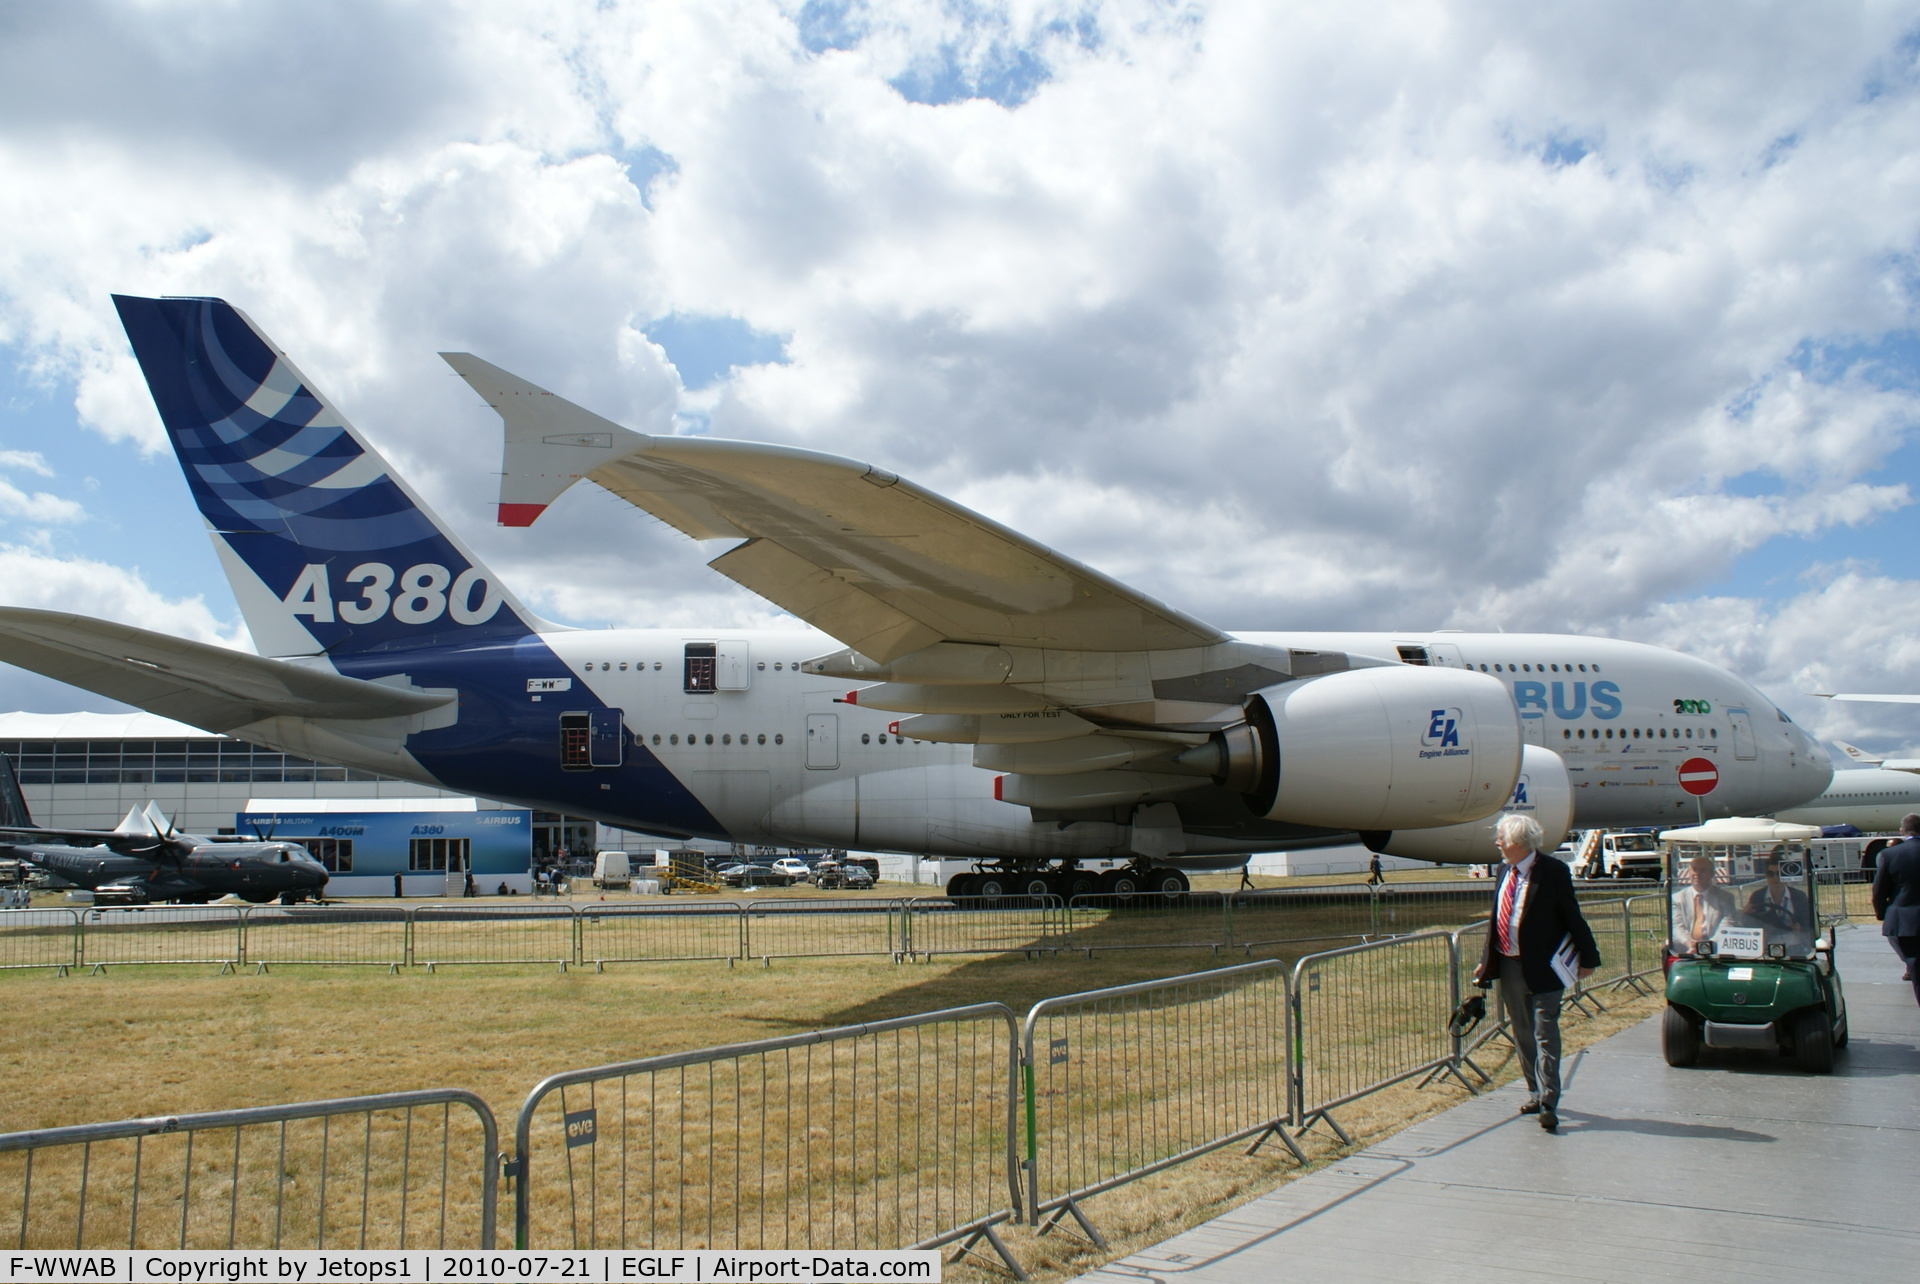 F-WWAB, 2014 Airbus A380-861 C/N 170, Static display at Fboro air show